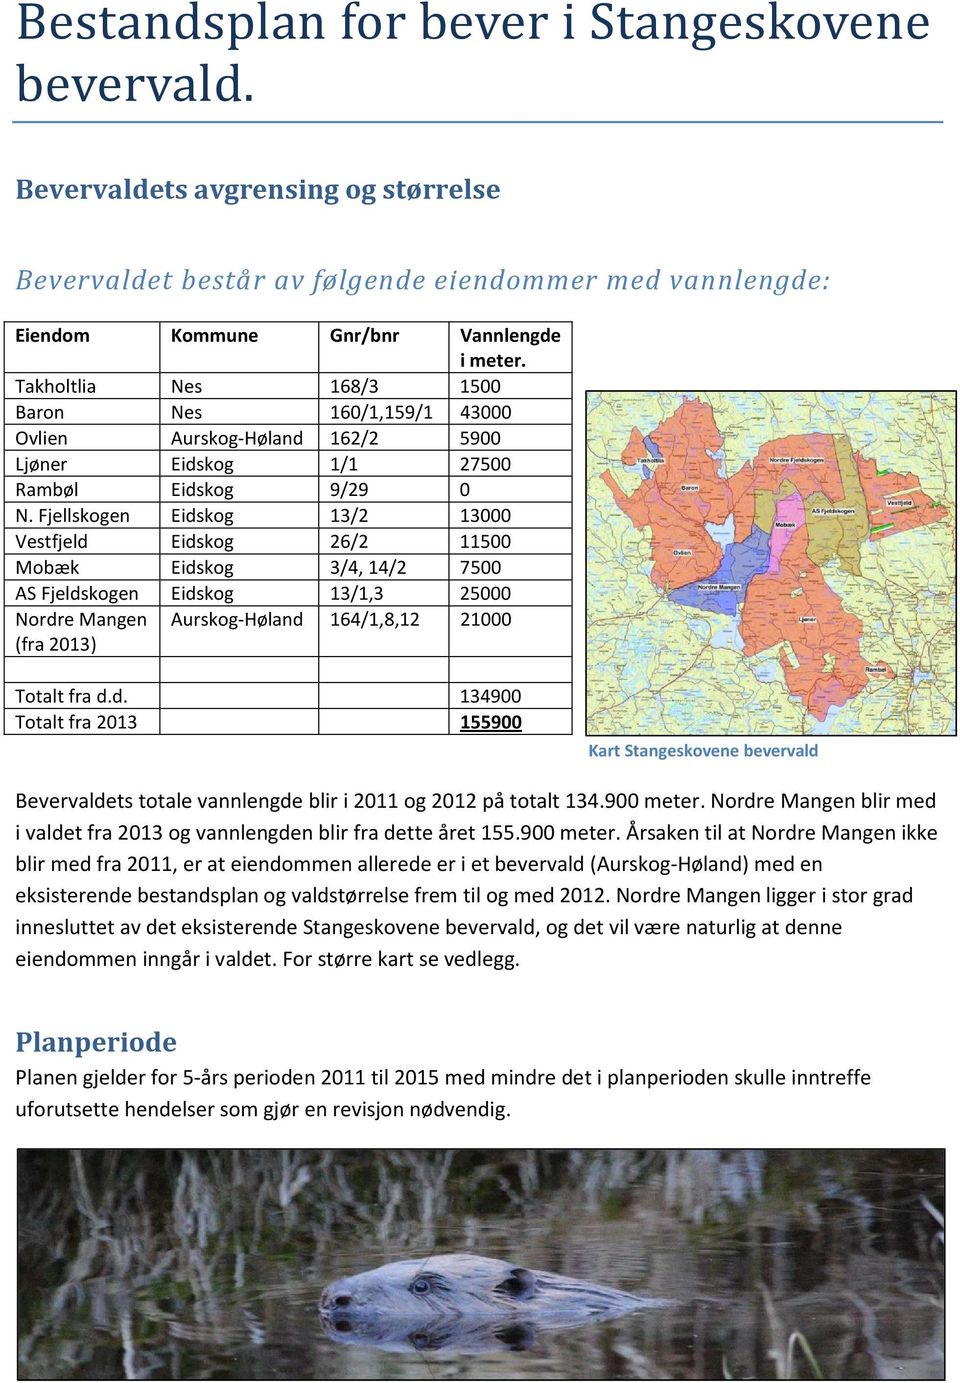 Fjellskogen Eidskog 13/2 13000 Vestfjeld Eidskog 26/2 11500 Mobæk Eidskog 3/4, 14/2 7500 AS Fjeldskogen Eidskog 13/1,3 25000 Nordre Mangen Aurskog-Høland 164/1,8,12 21000 (fra 2013) Totalt fra d.d. 134900 Totalt fra 2013 155900 Kart Stangeskovene bevervald Bevervaldets totale vannlengde blir i 2011 og 2012 på totalt 134.